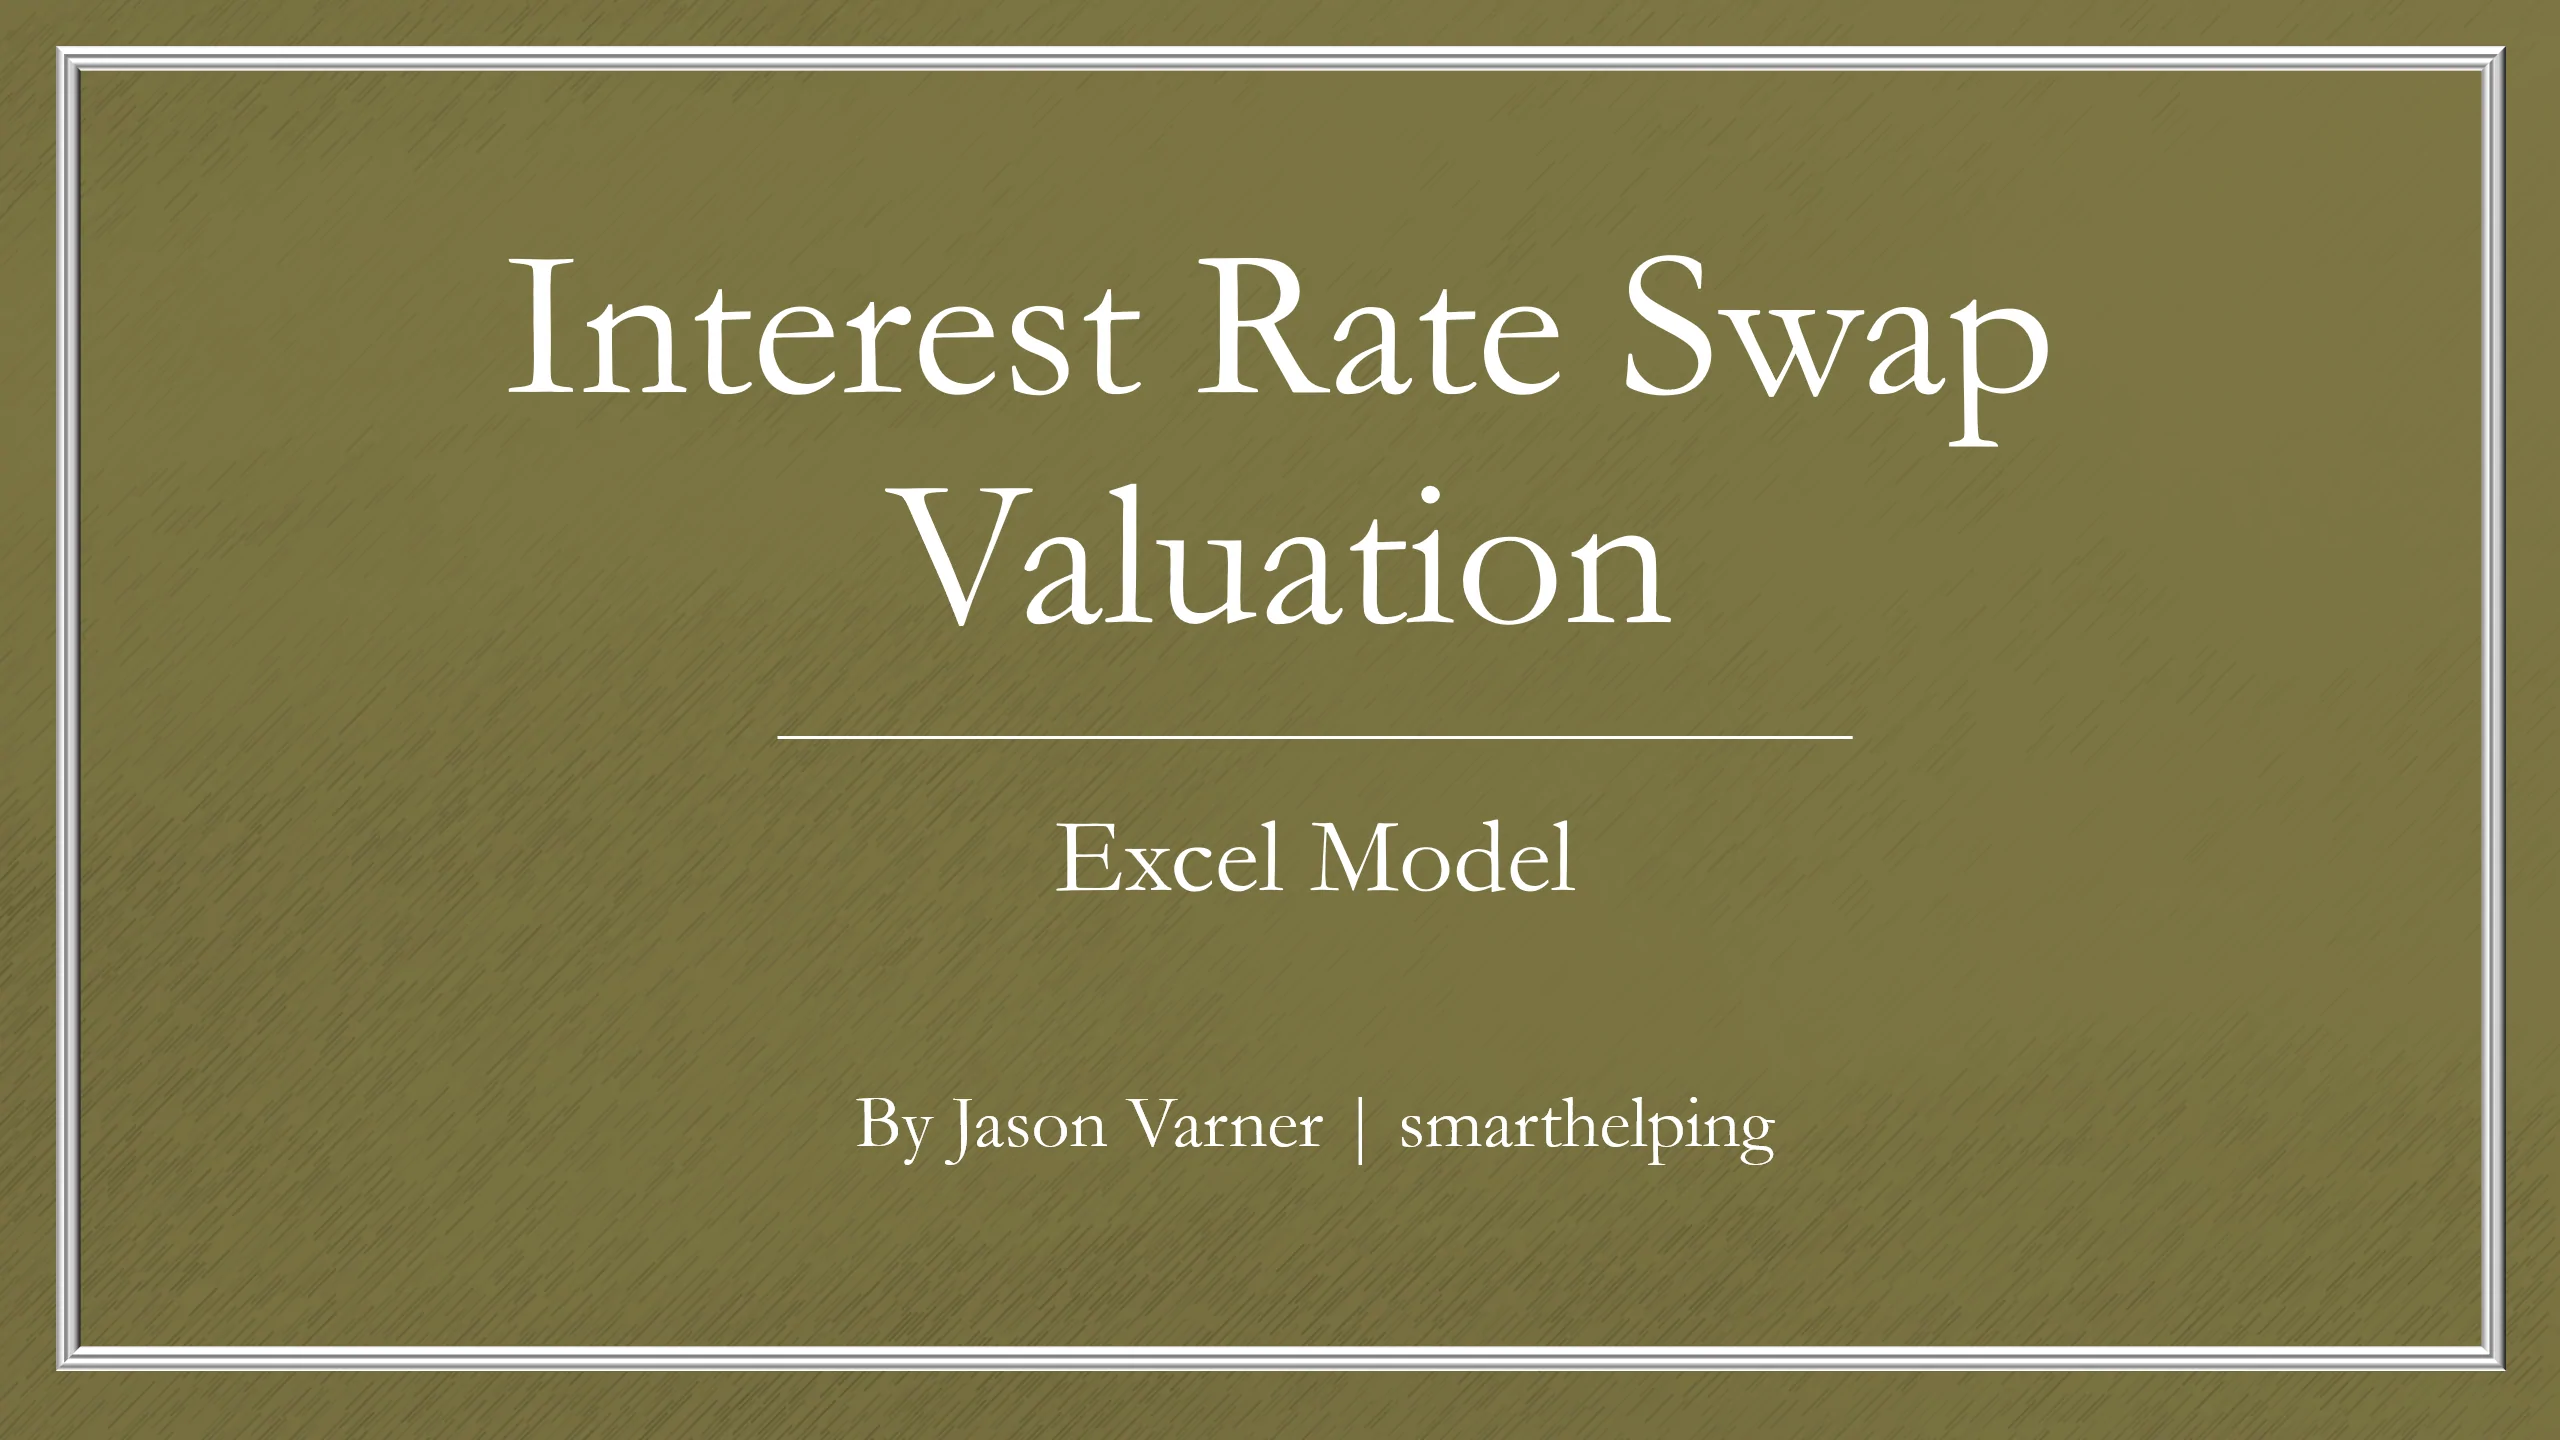 Interest Rate Swap Valuation